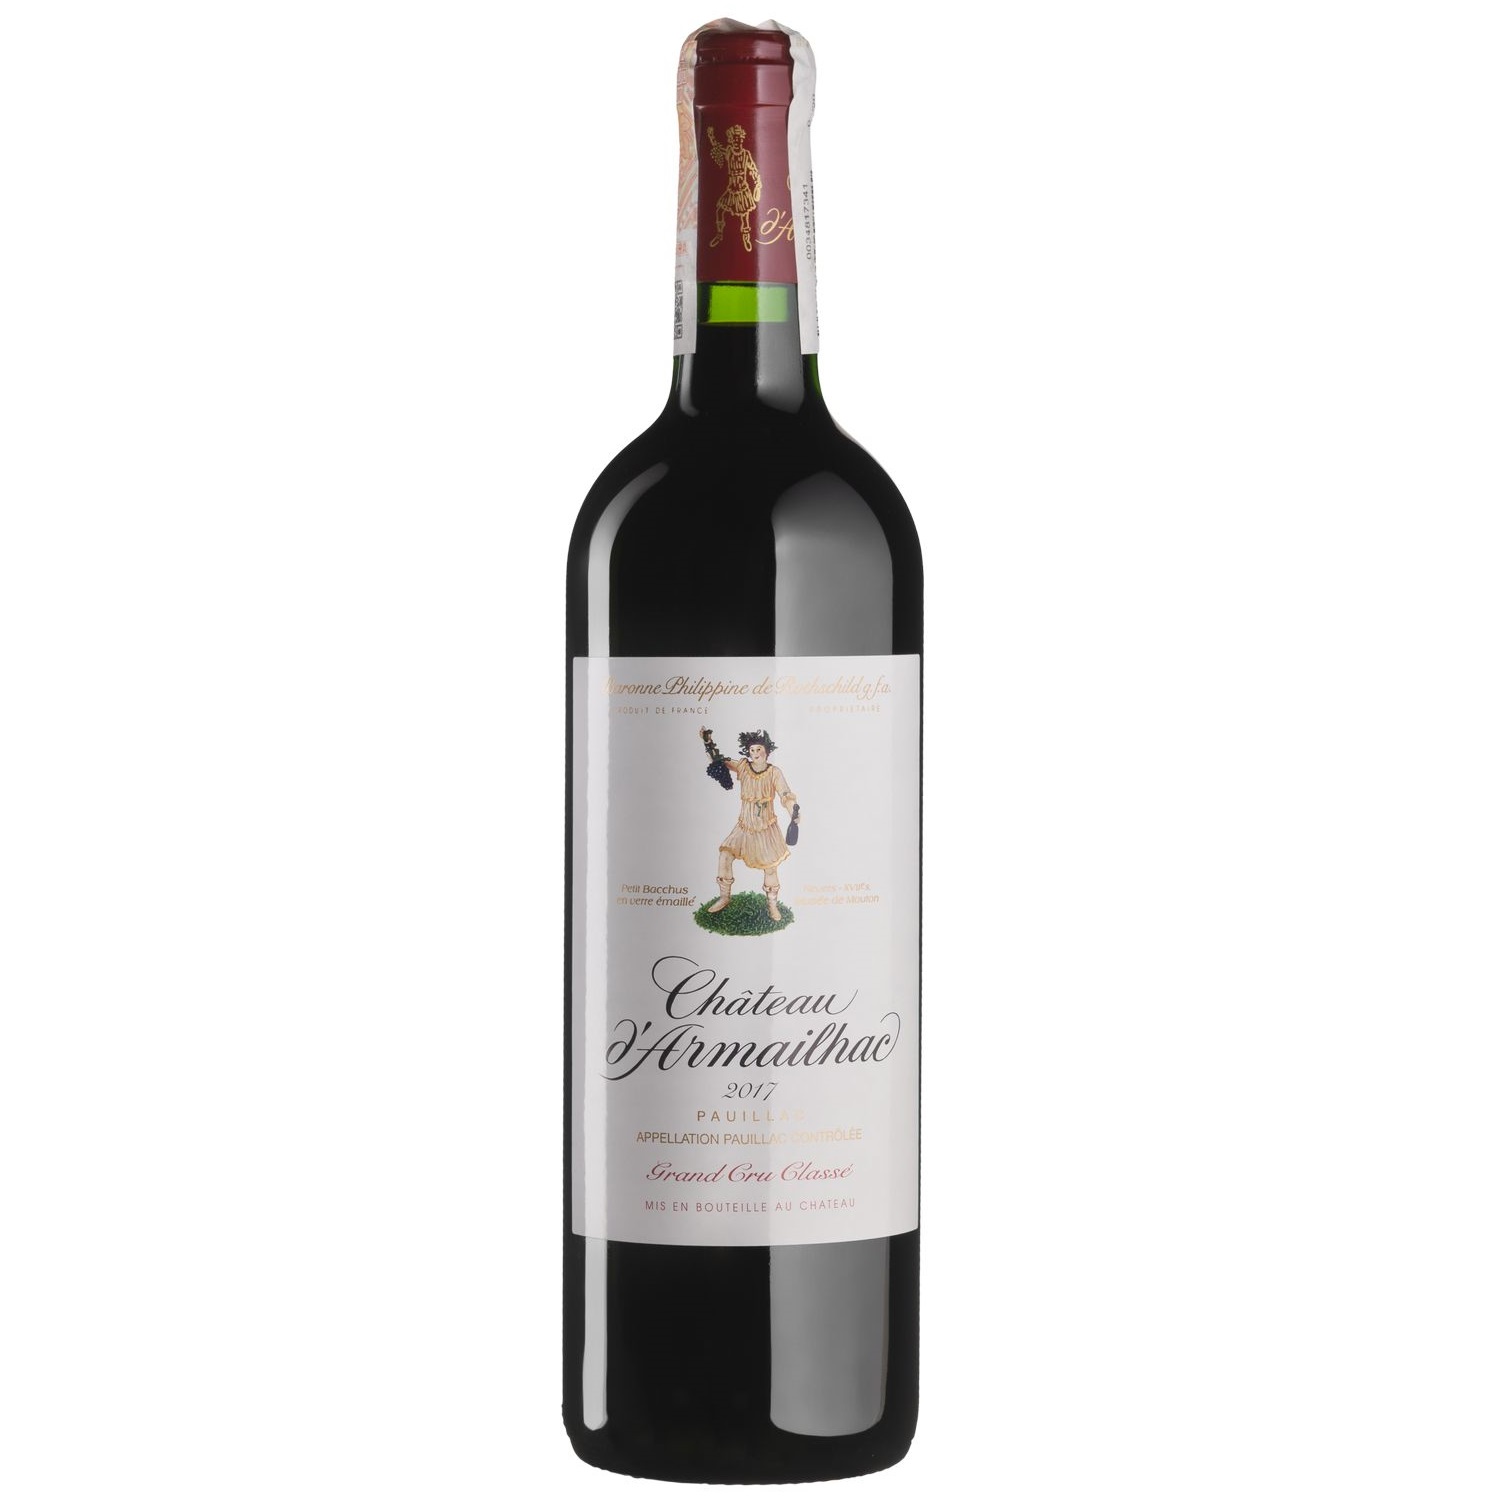 Вино Baron Philippe de Rothschild Chateau d'Armailhac 2017, красное, сухое, 0,75 л - фото 1